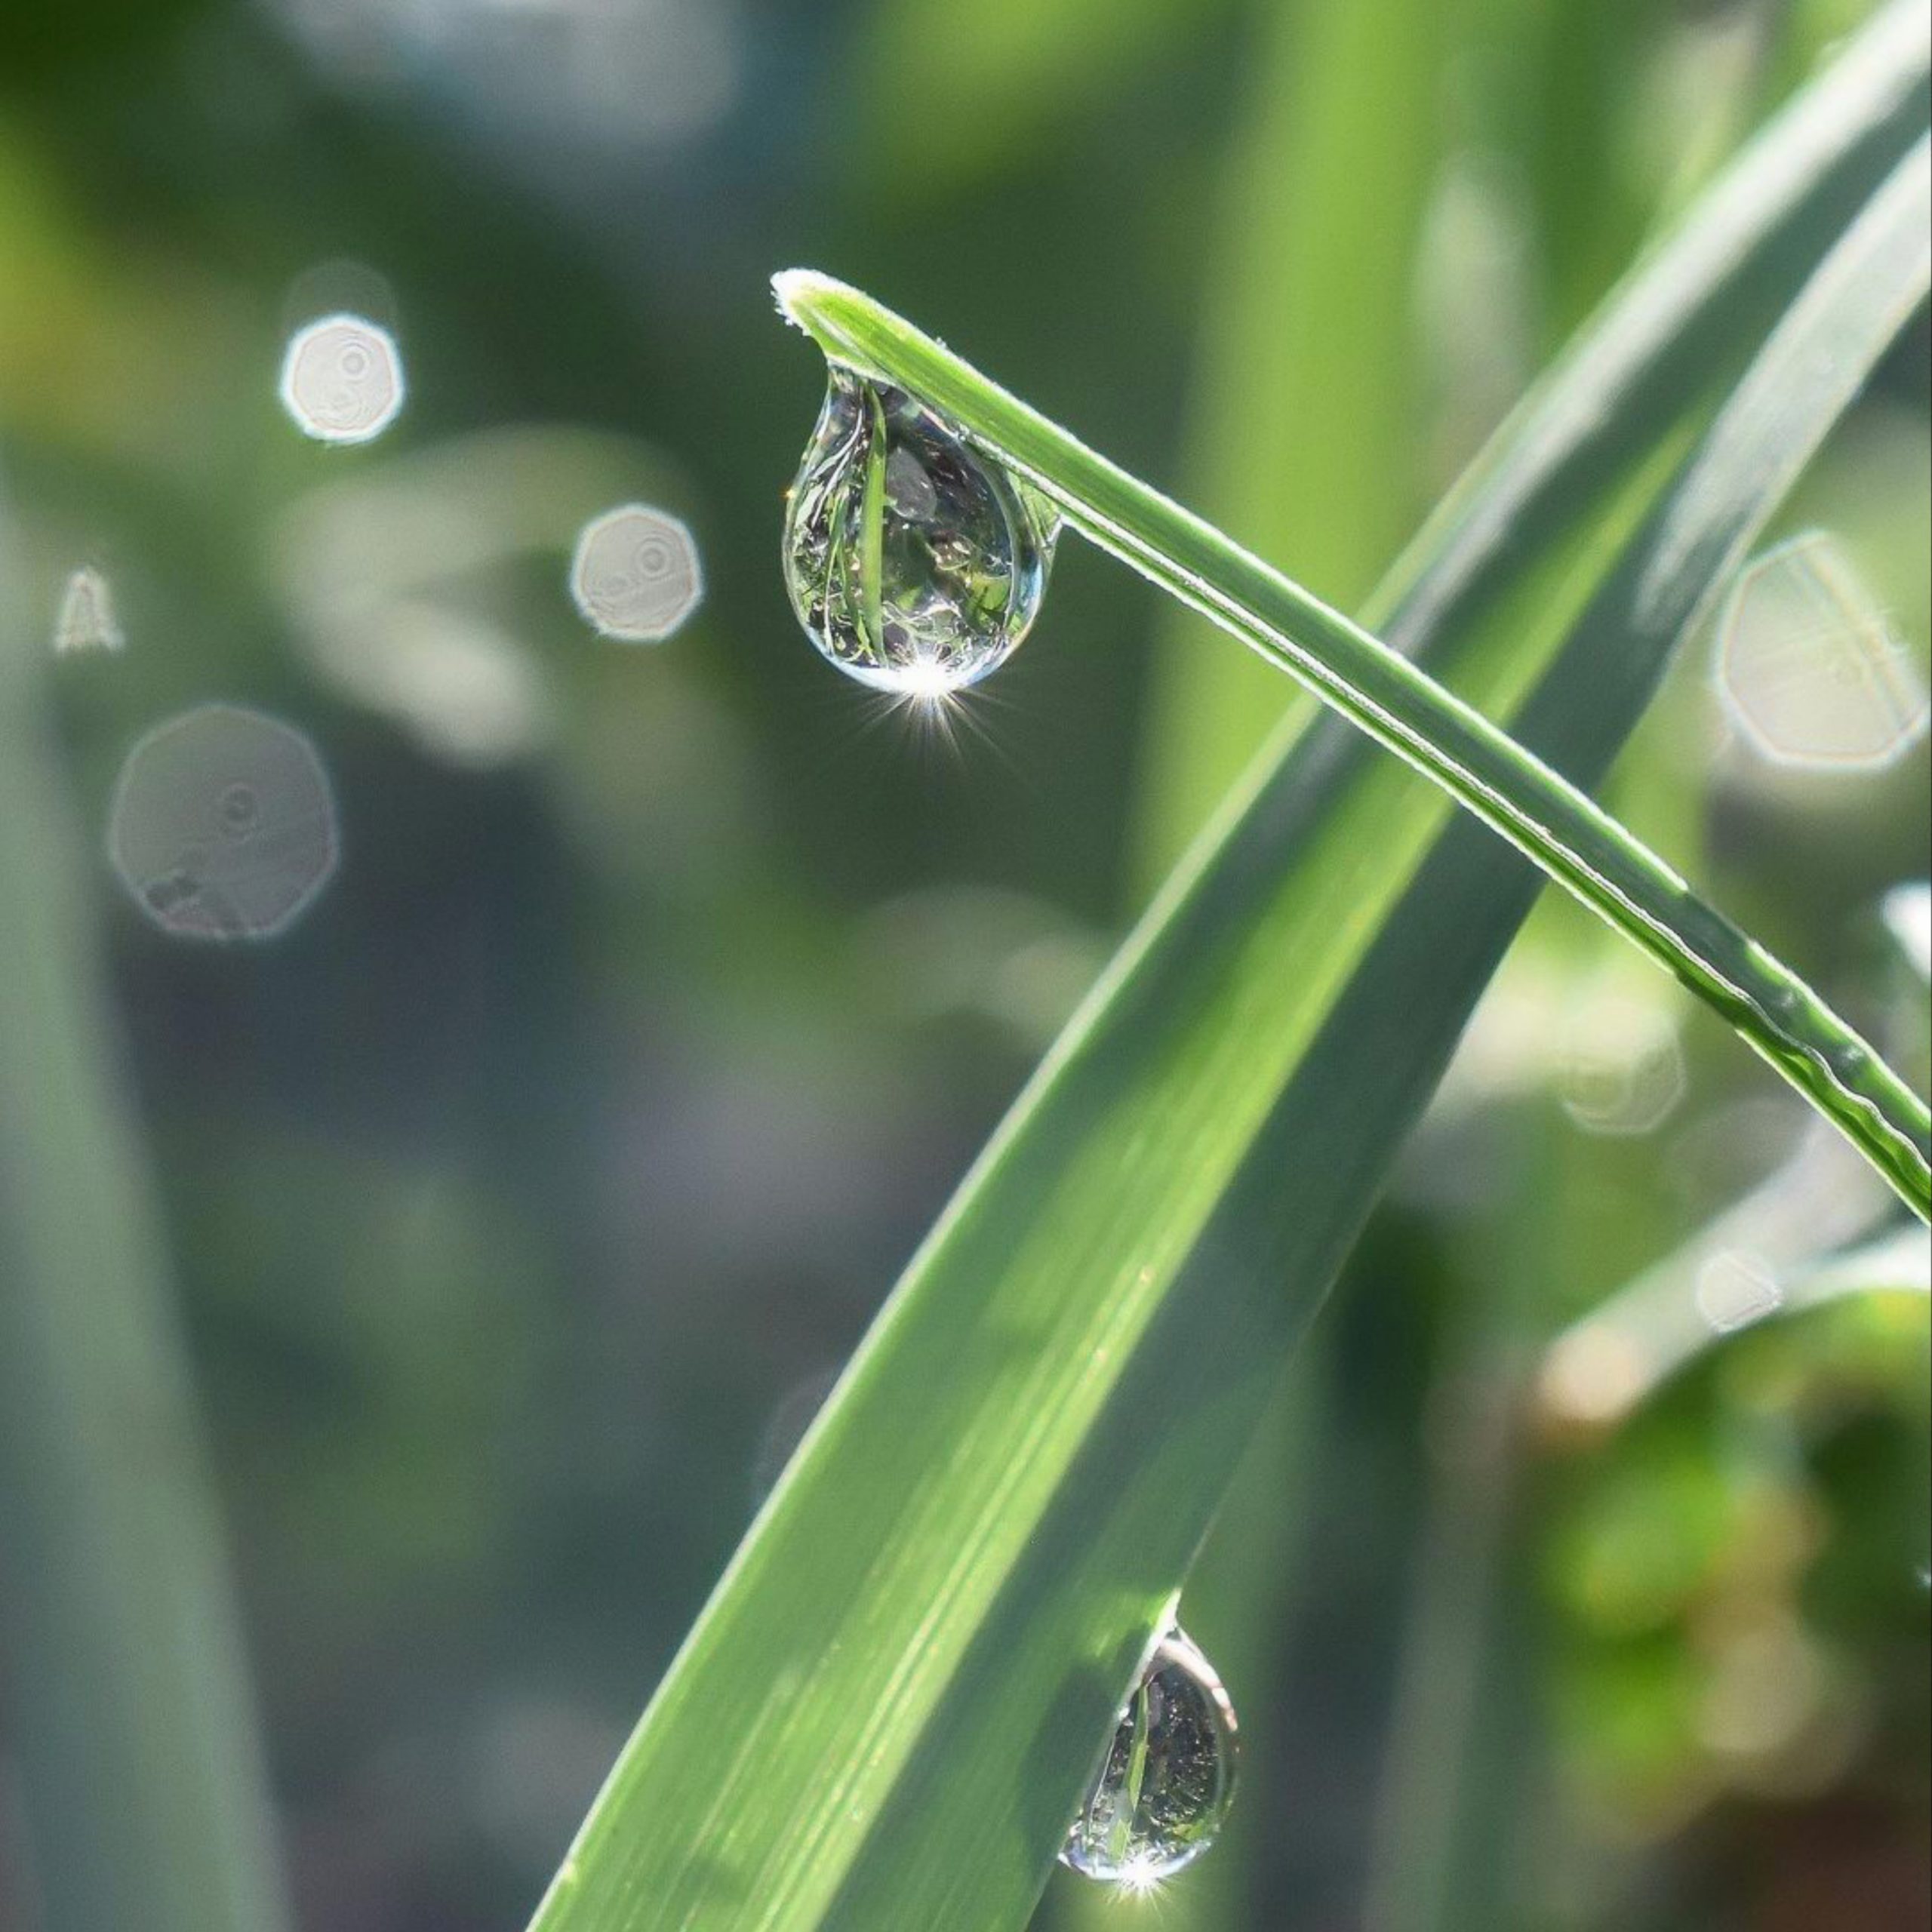 Waterdrop on a leaf